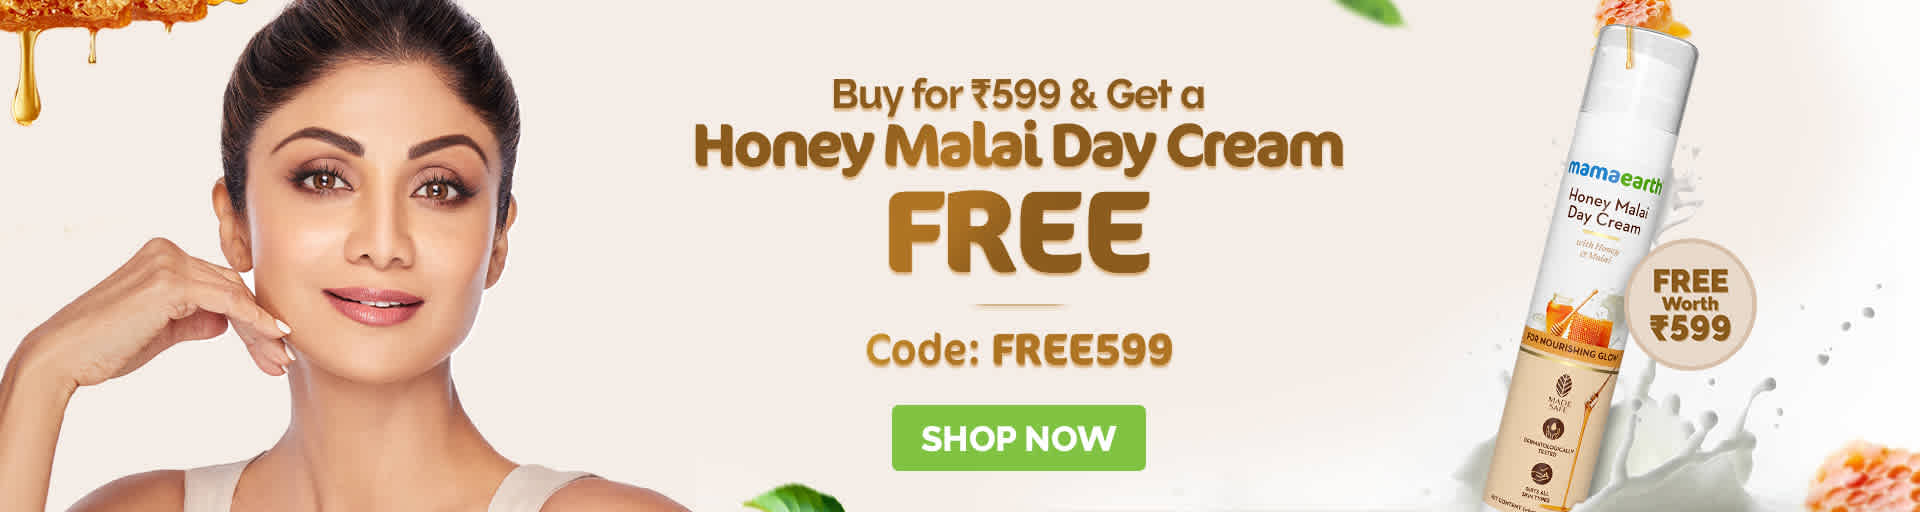 mamaearth.in - Free Honey Malai Day Cream